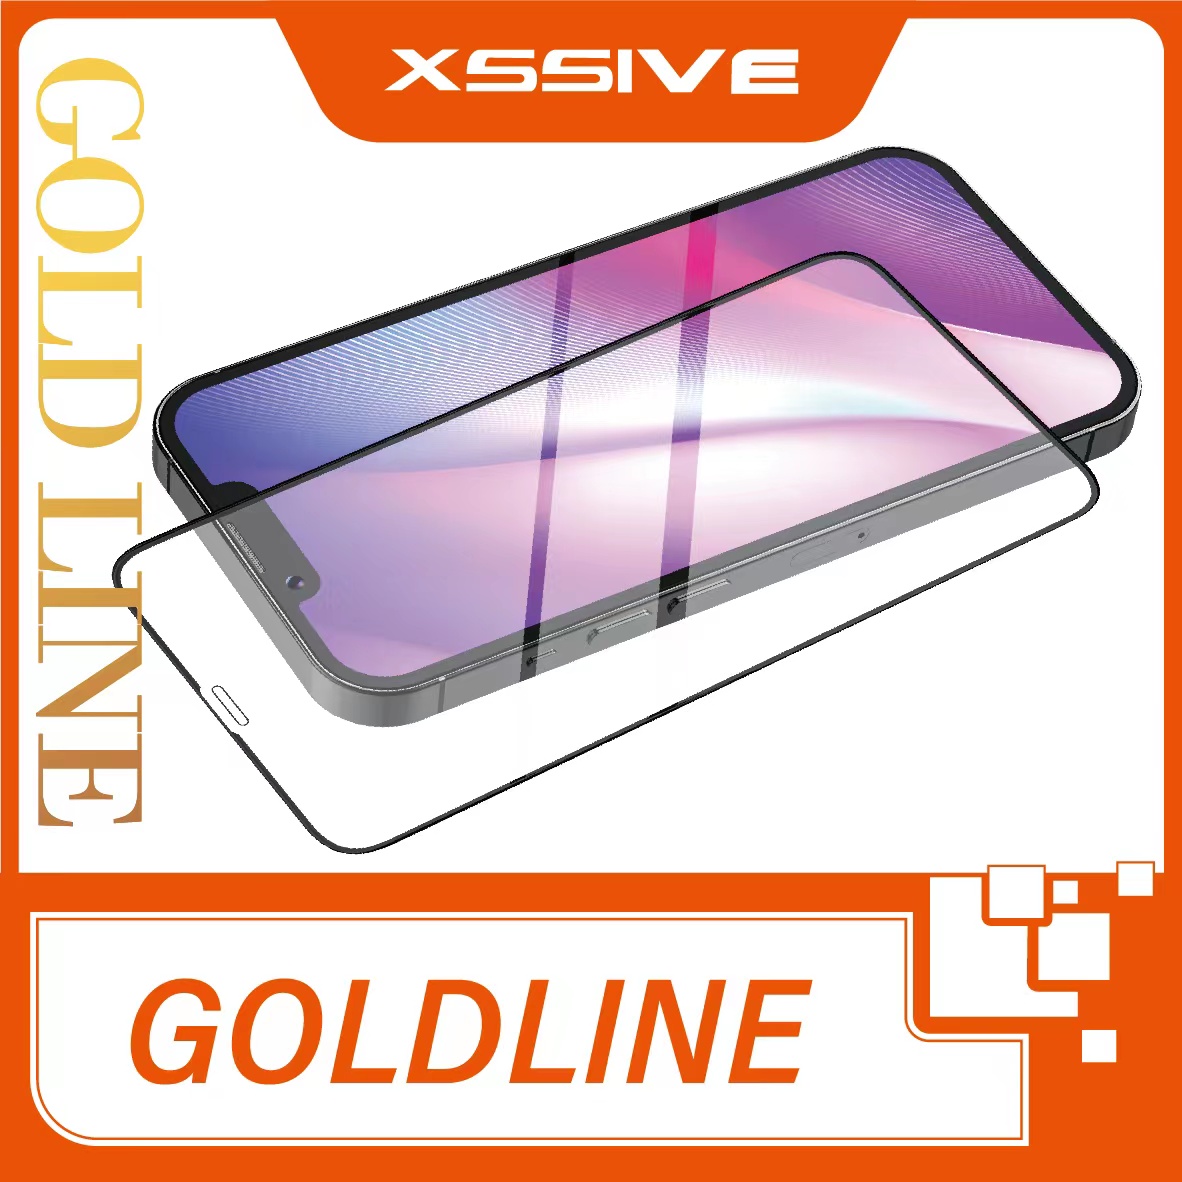 NL - Artikelgroep - Smartphone - Goldline